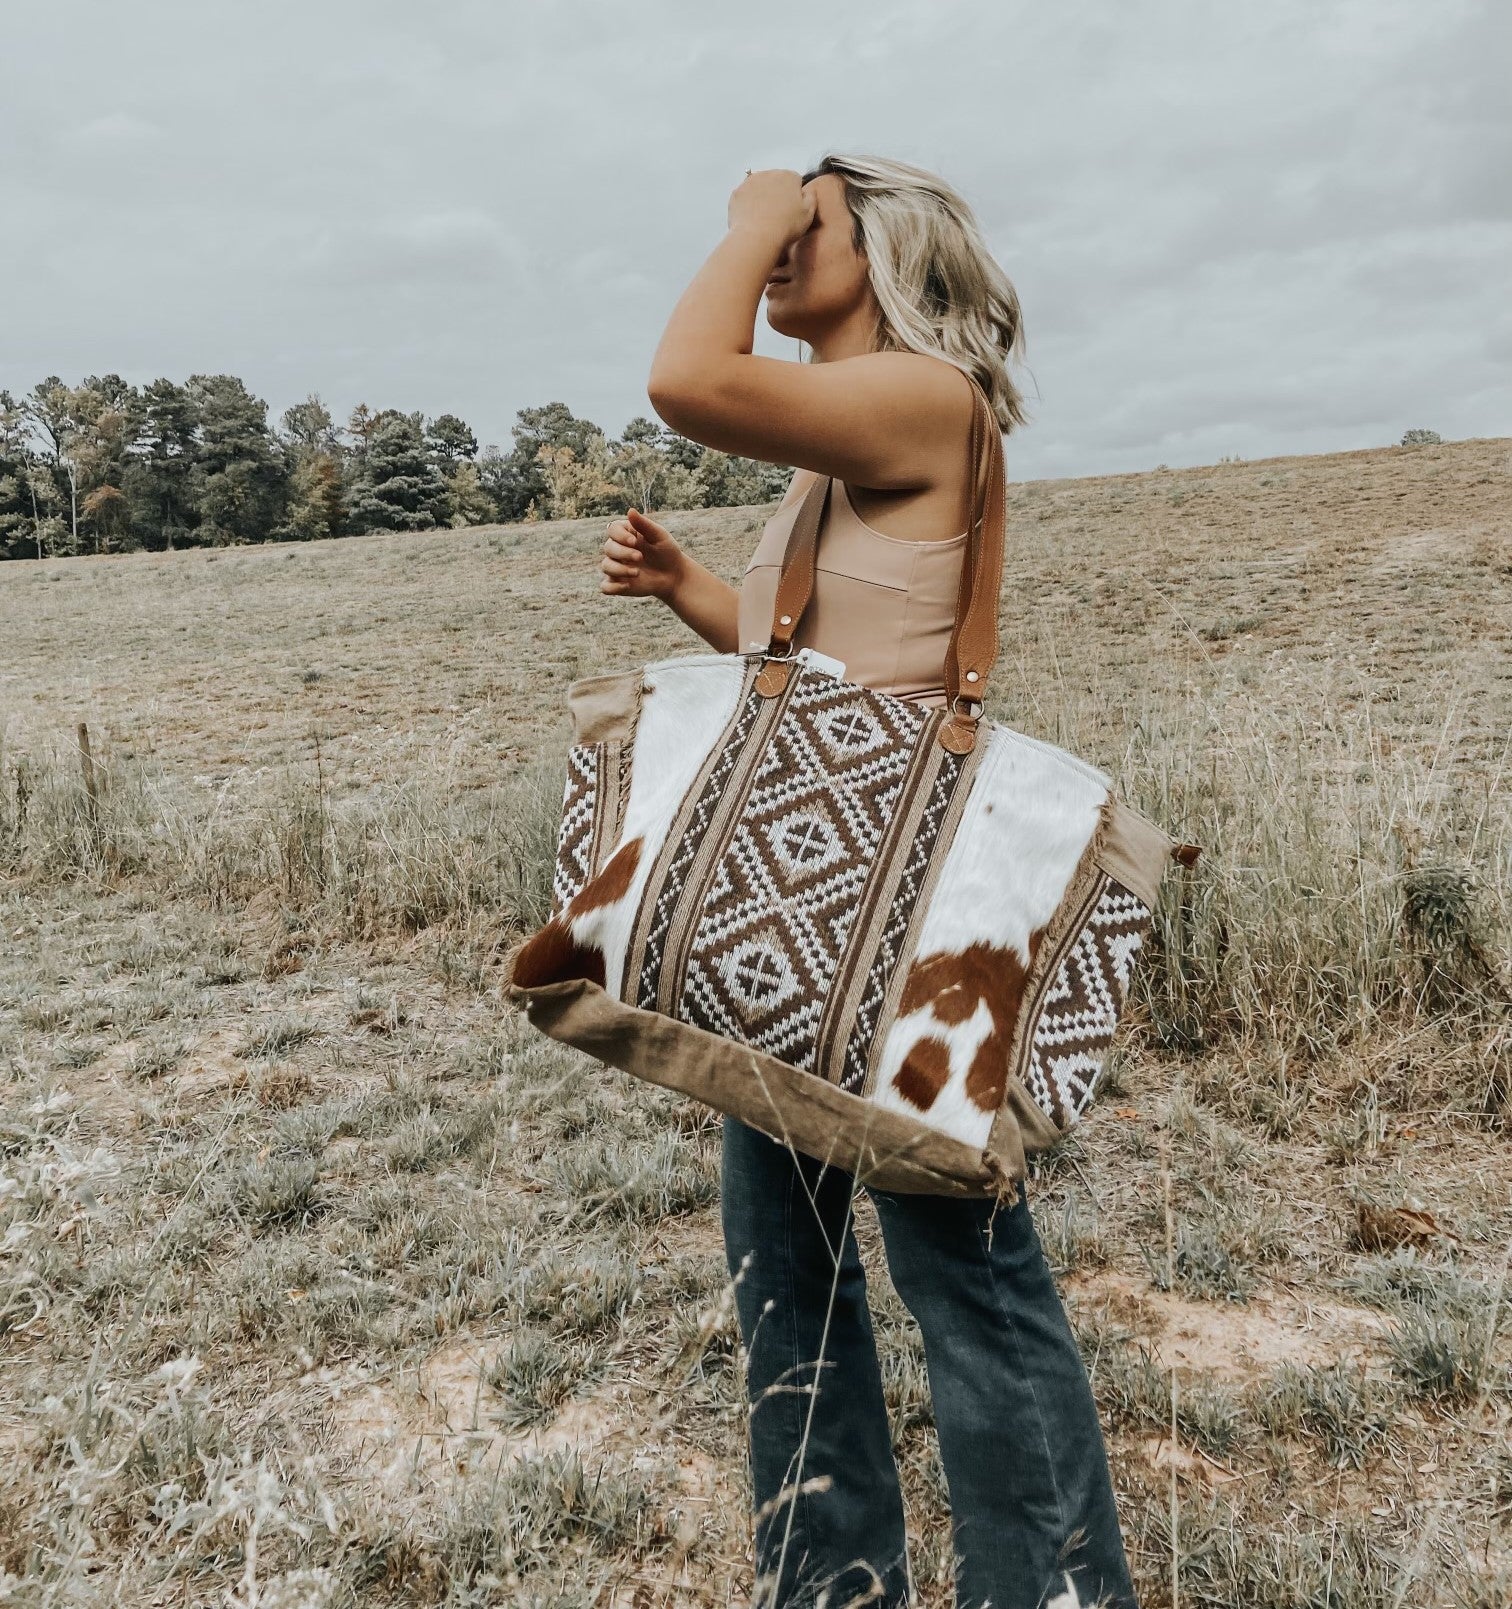 Montana West Bags & Handbags for Women for sale | eBay